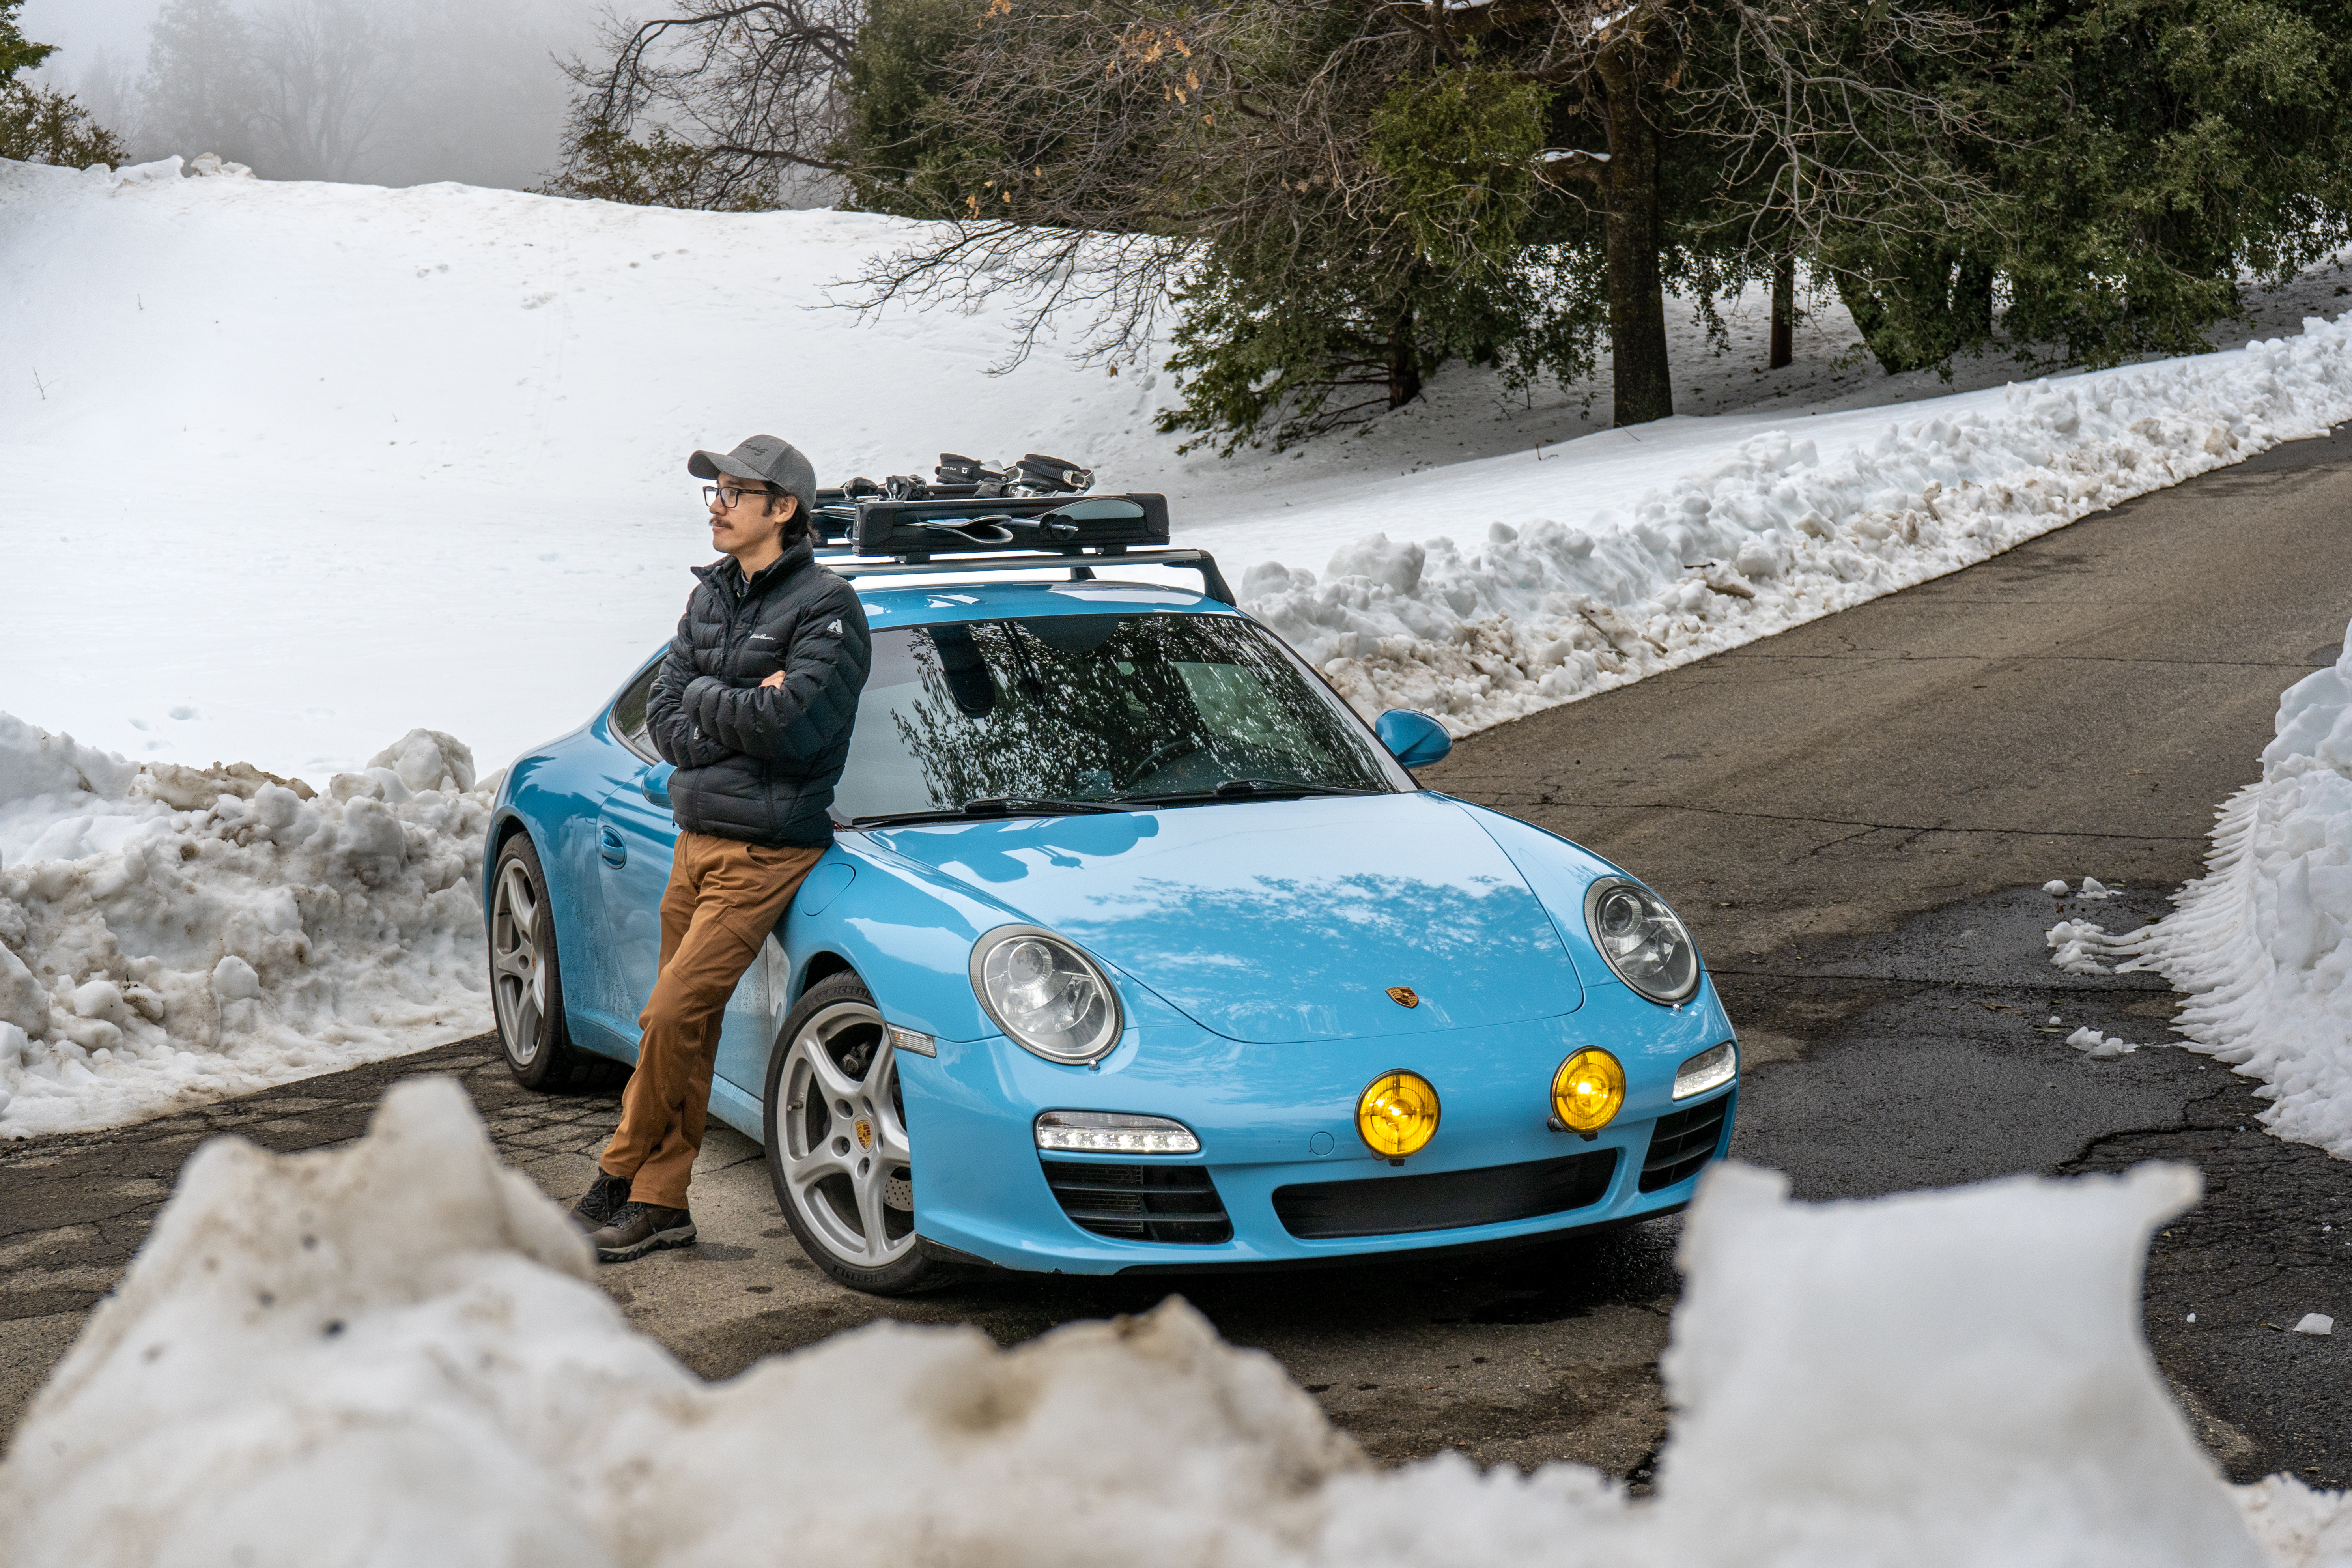 Porsche 911 (type 997), headlights on, on a snowy road